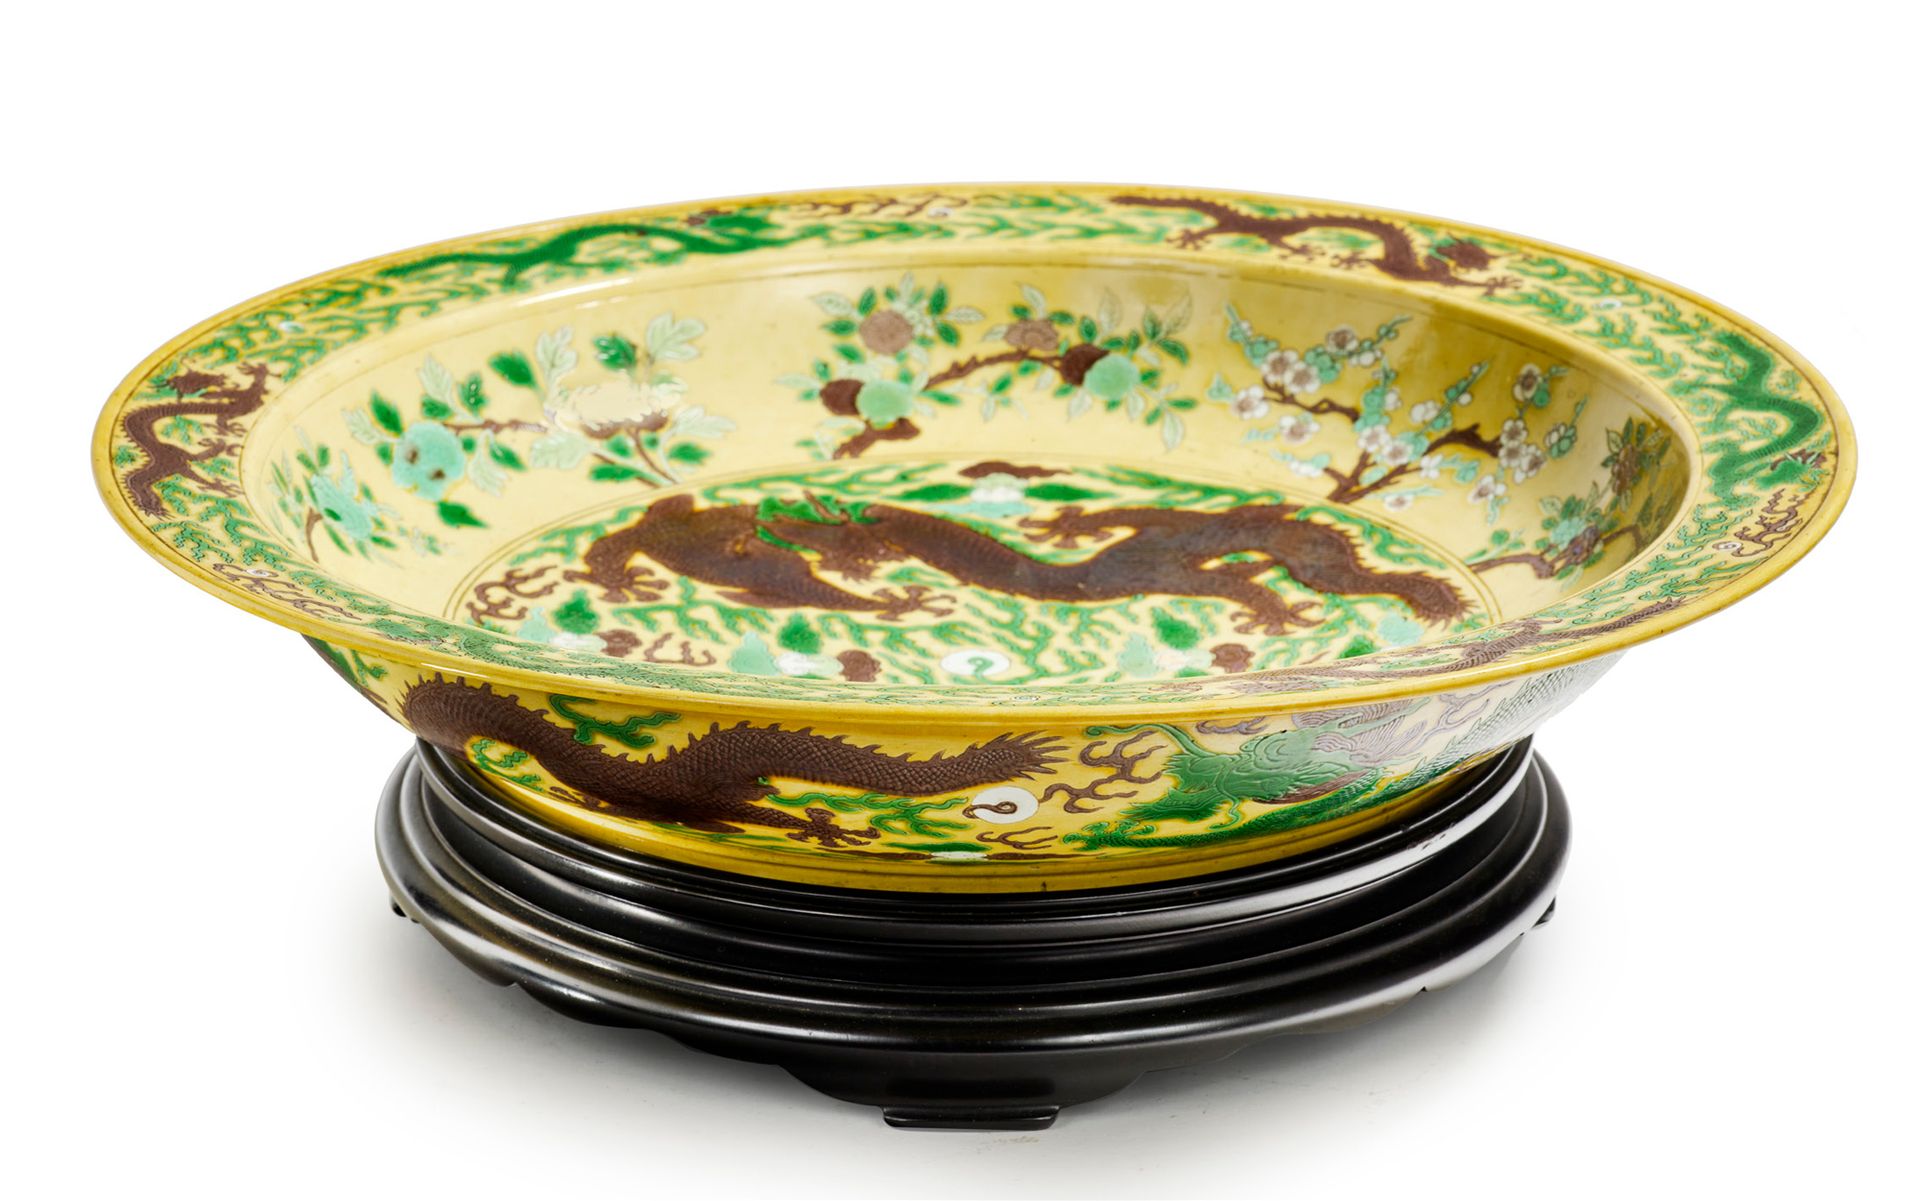 CHINE XVIIIe SIÈCLE, PÉRIODE KANGXI (1661 - 1722) 
Gran plato de porcelana esmal&hellip;